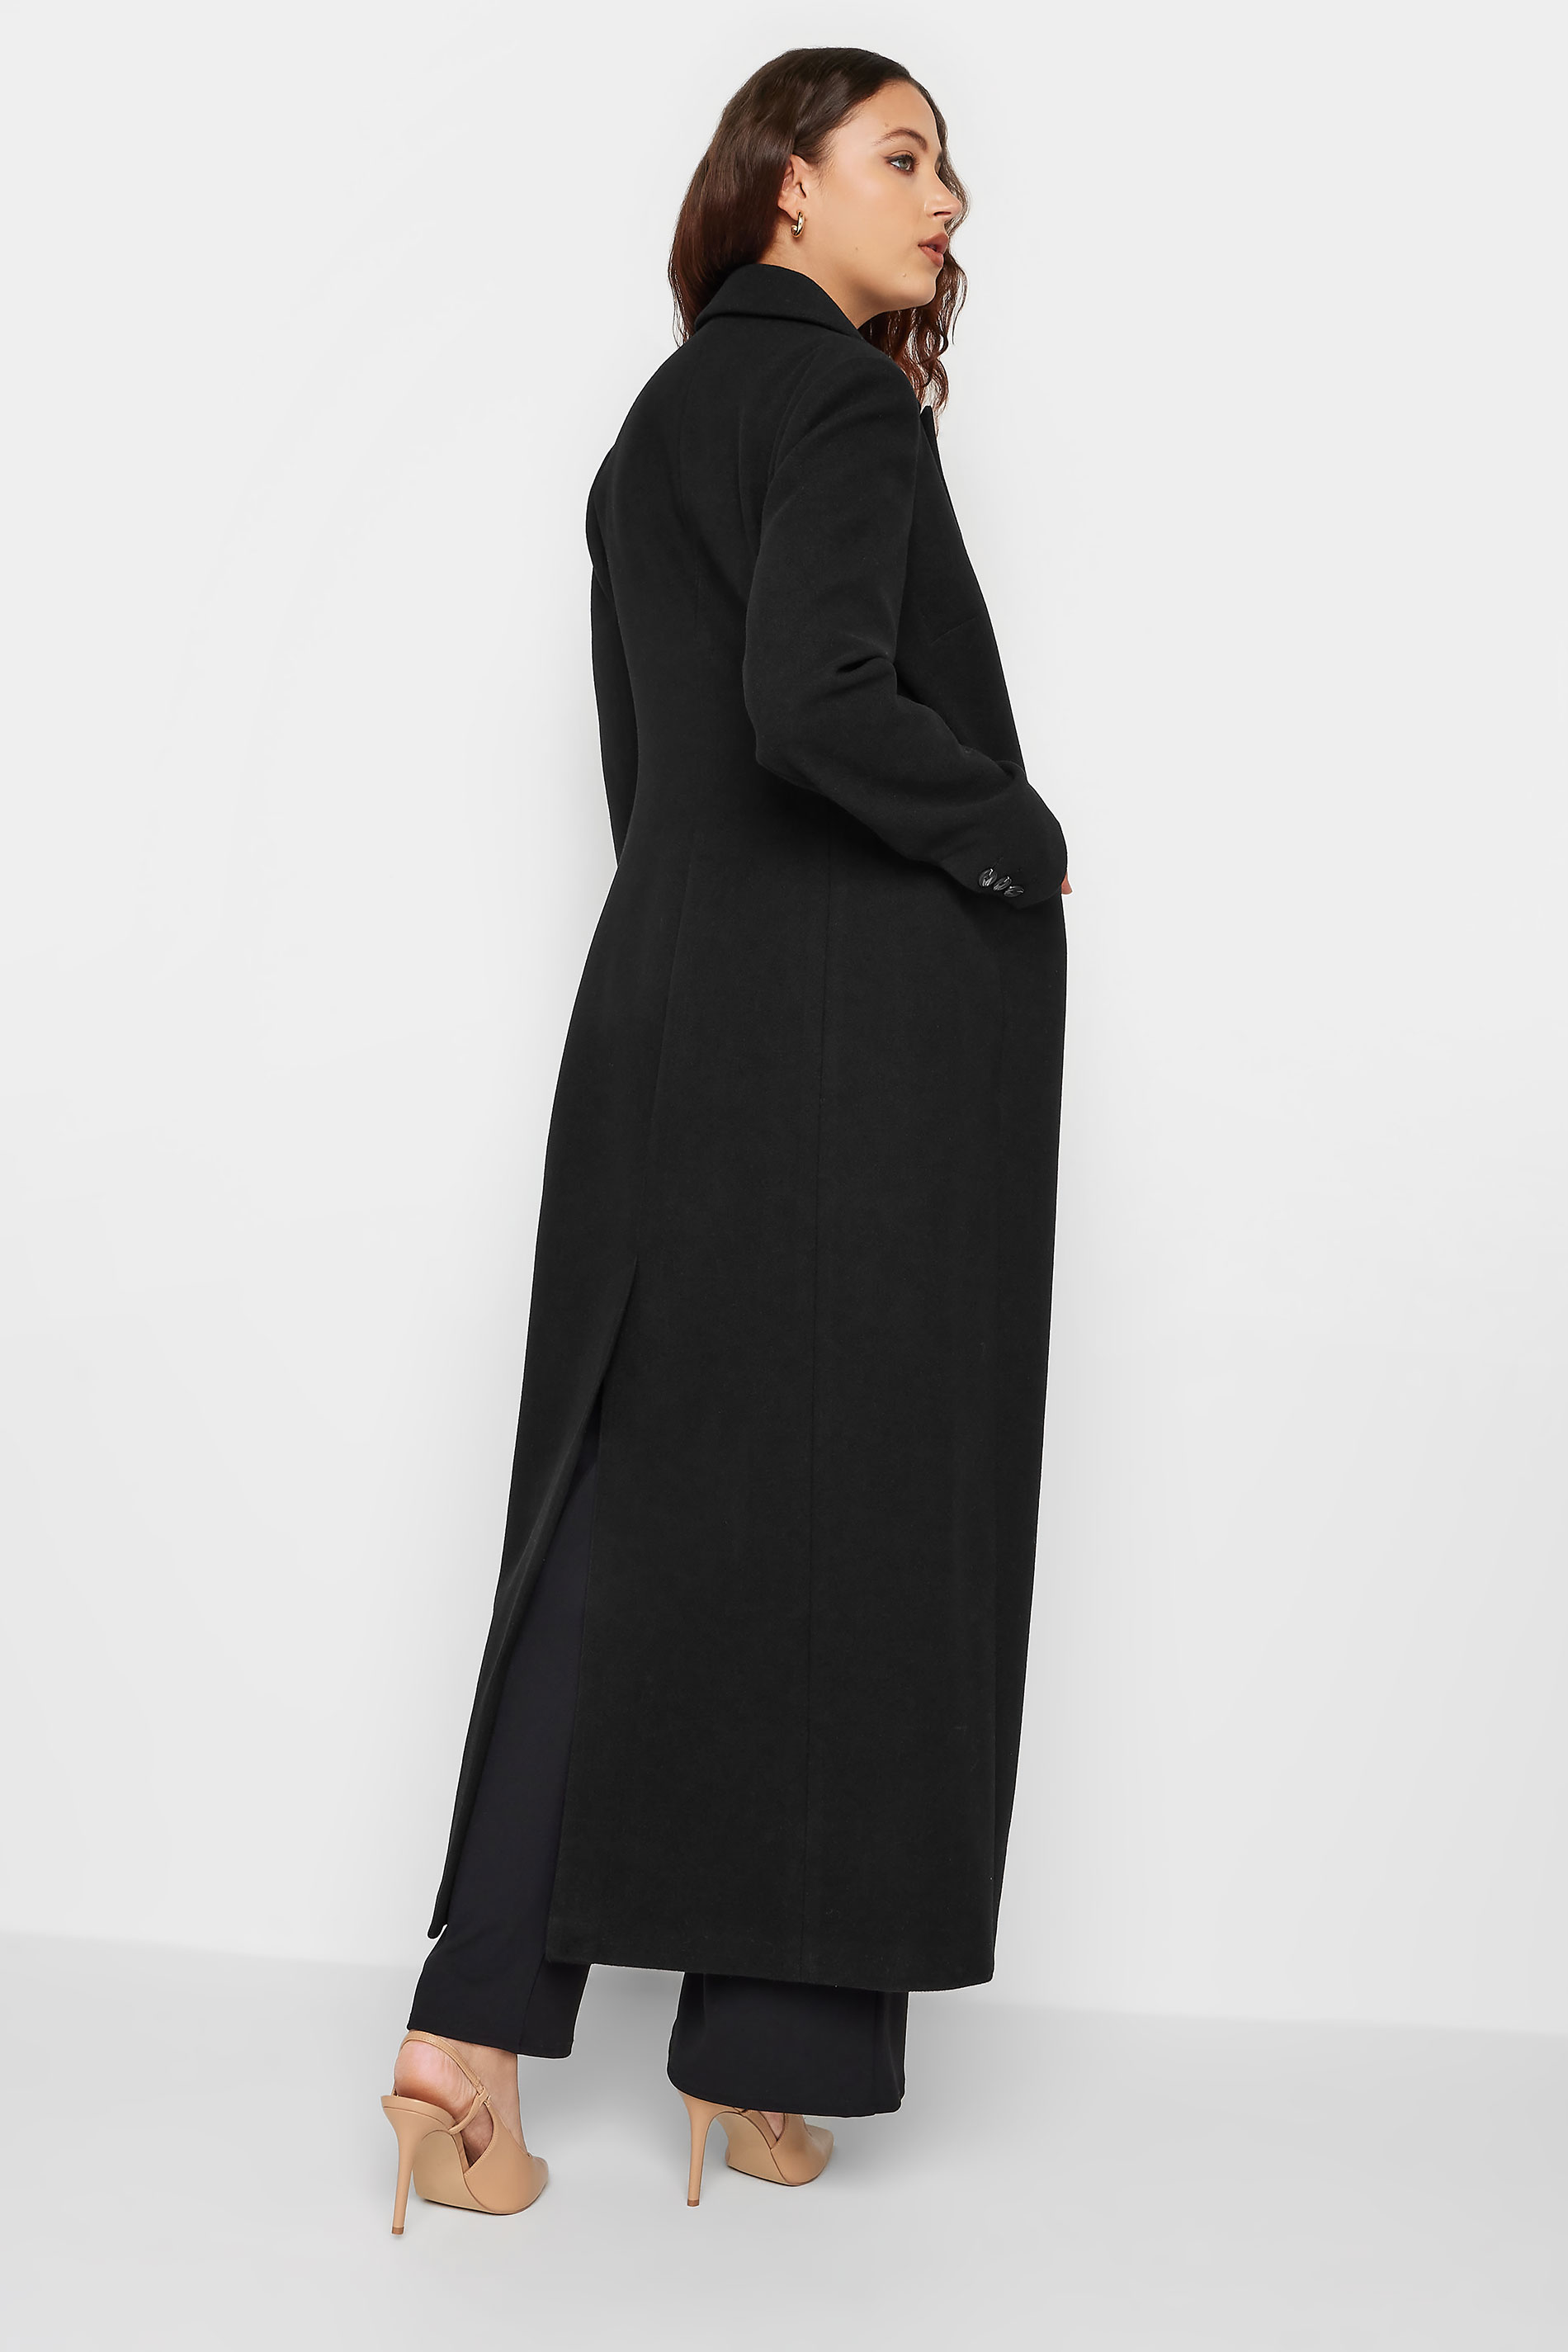 Tall Women's LTS Black Long Formal Coat | Long Tall Sally 3